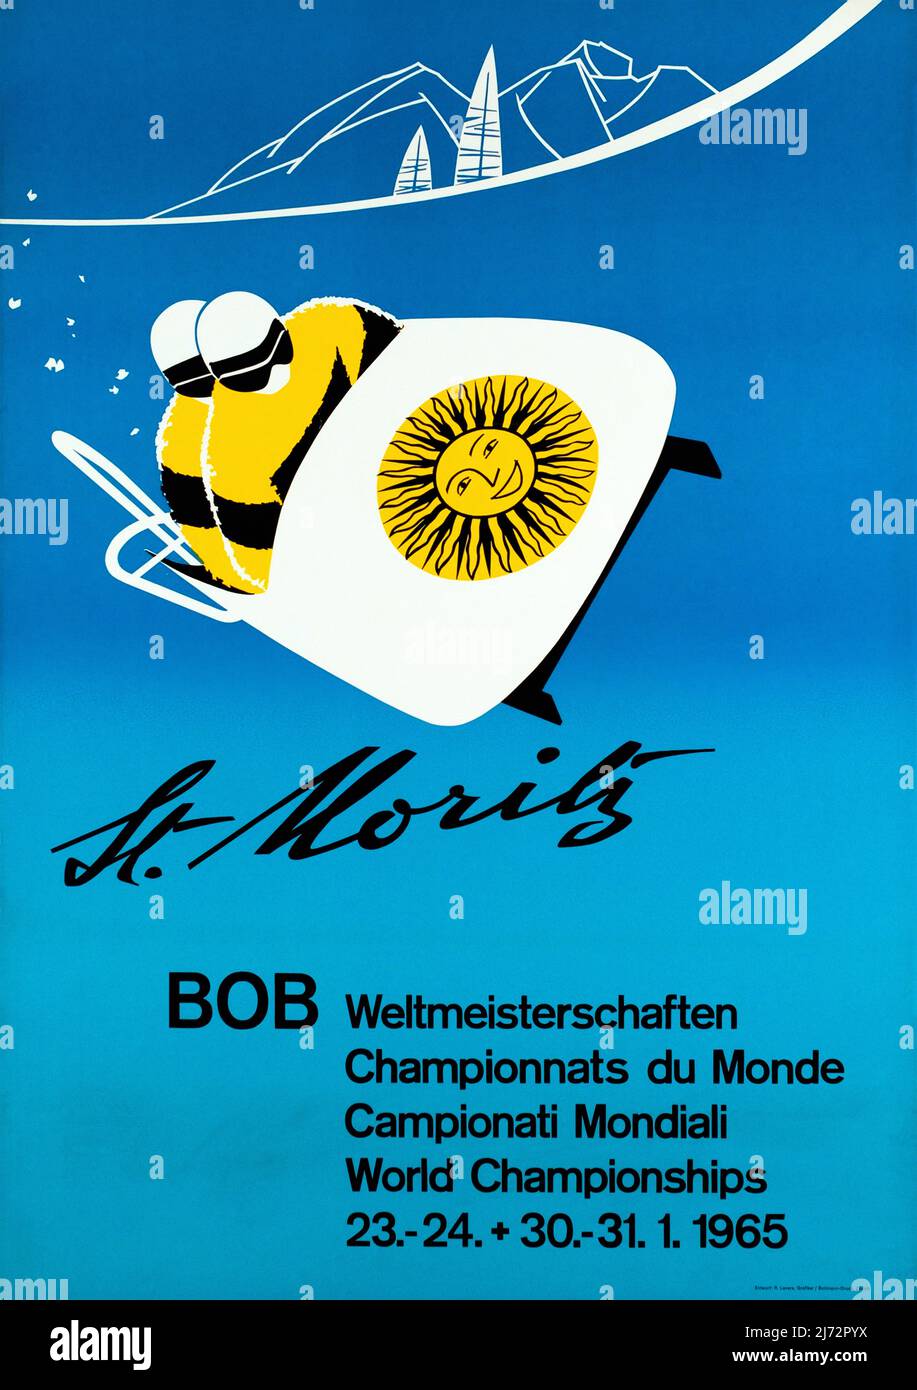 VINTAGE 1960s Travel Poster St. Moritz, Championnats du monde Bob Rudolph LEVERS 1965 Stockfoto